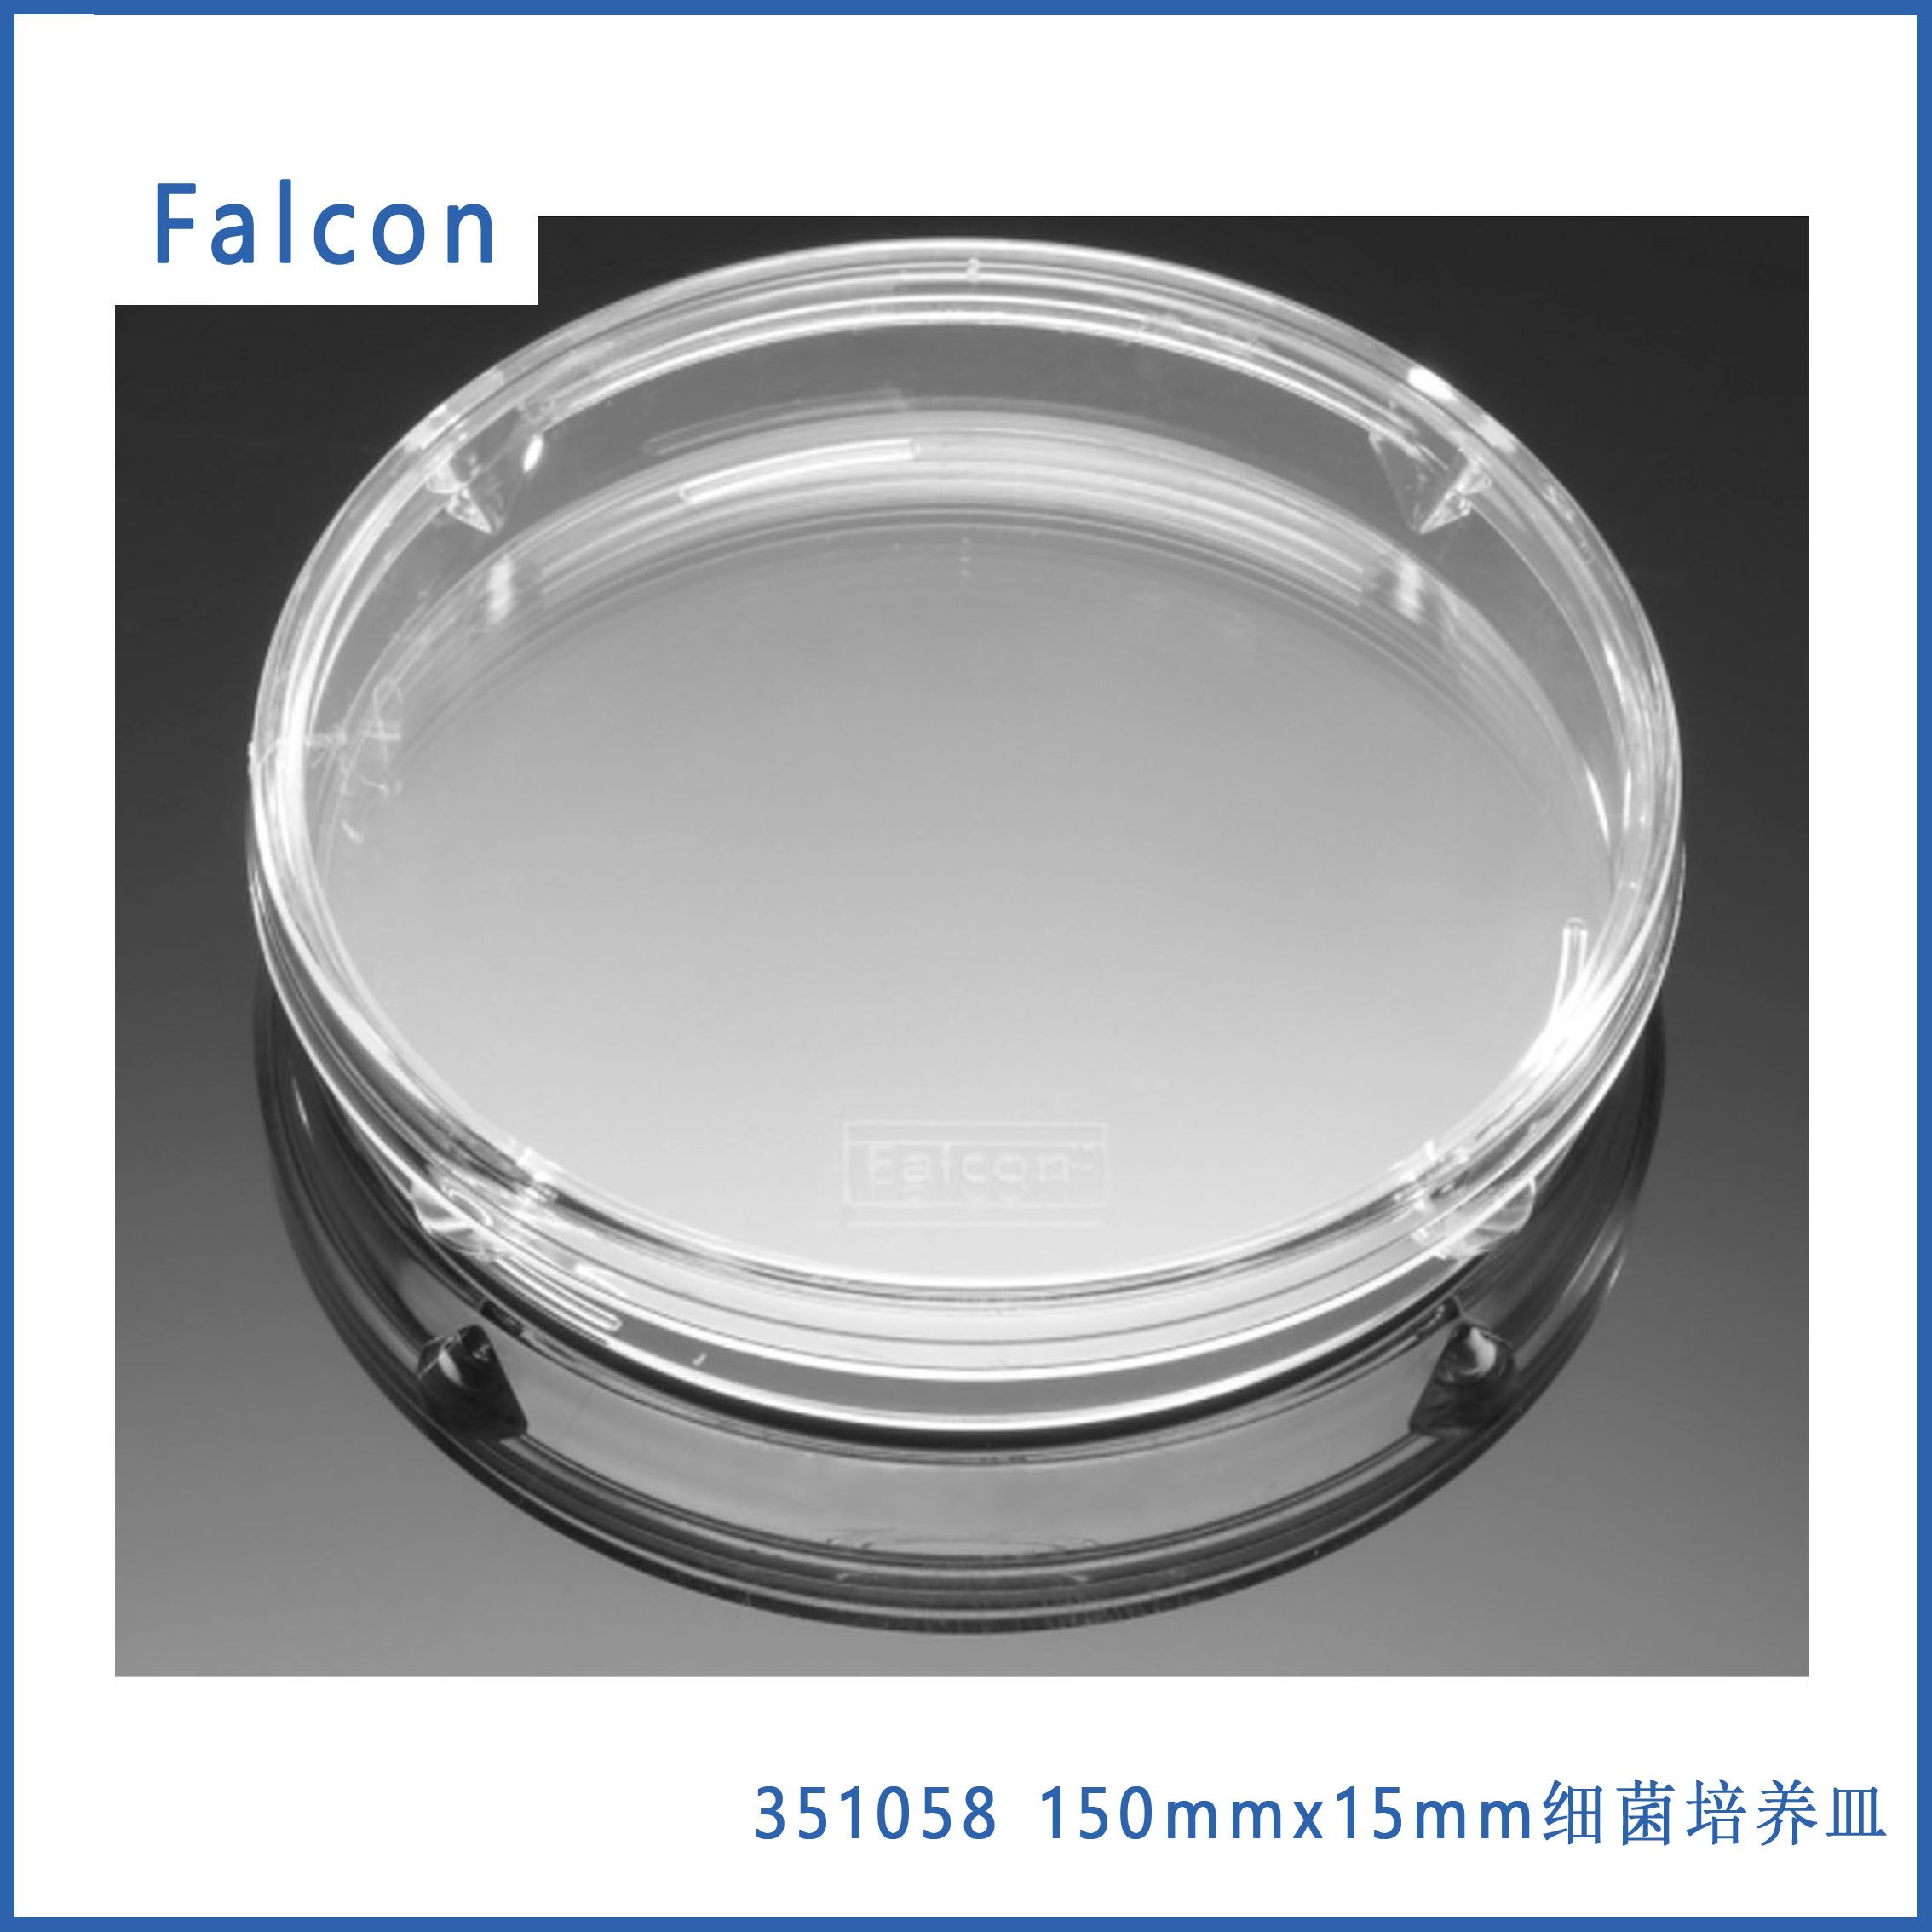 Corning Falcon 351058 150 mm x 15 mm非TC处理细菌培养皿， ​​​​​​​无菌,10个/包，100个/箱,现货